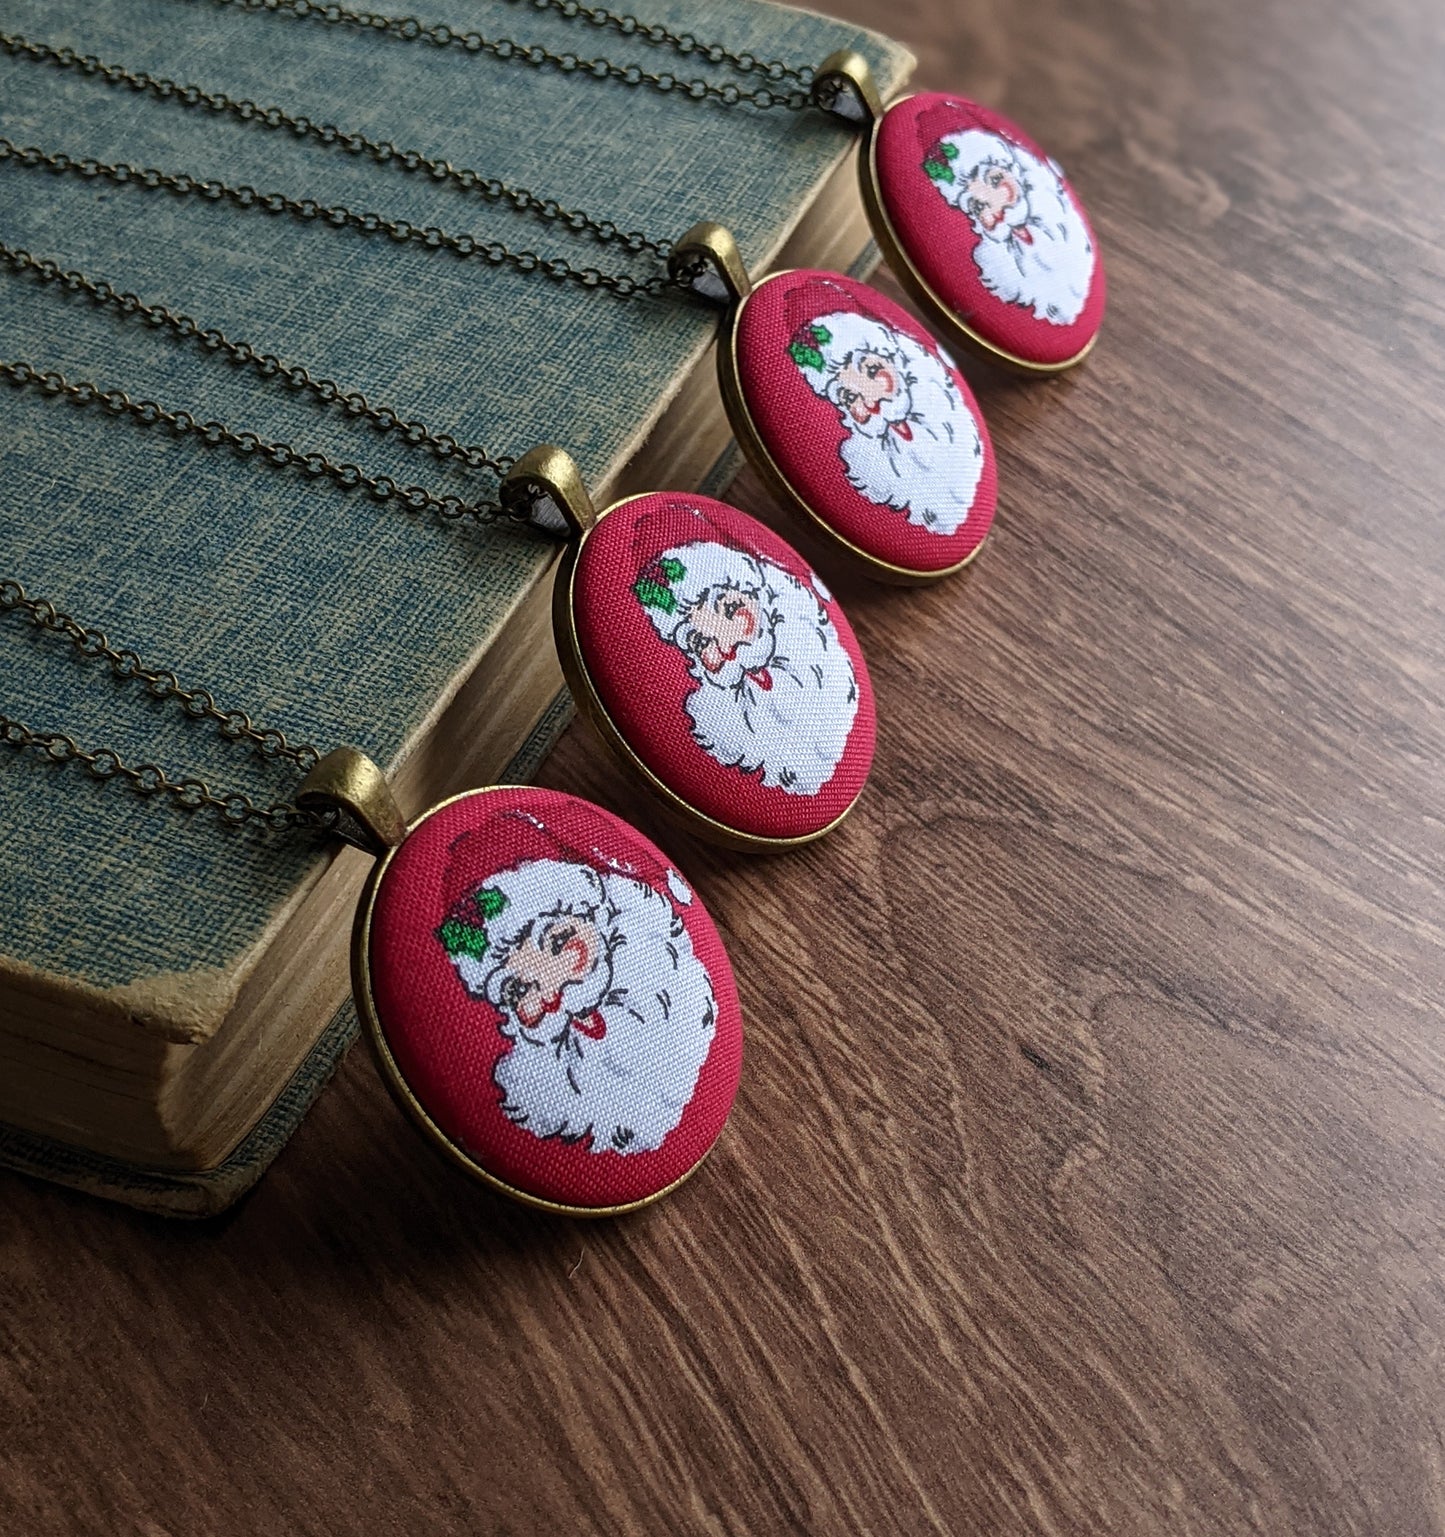 Retro Santa Claus Necklace, Festive Christmas Jewelry